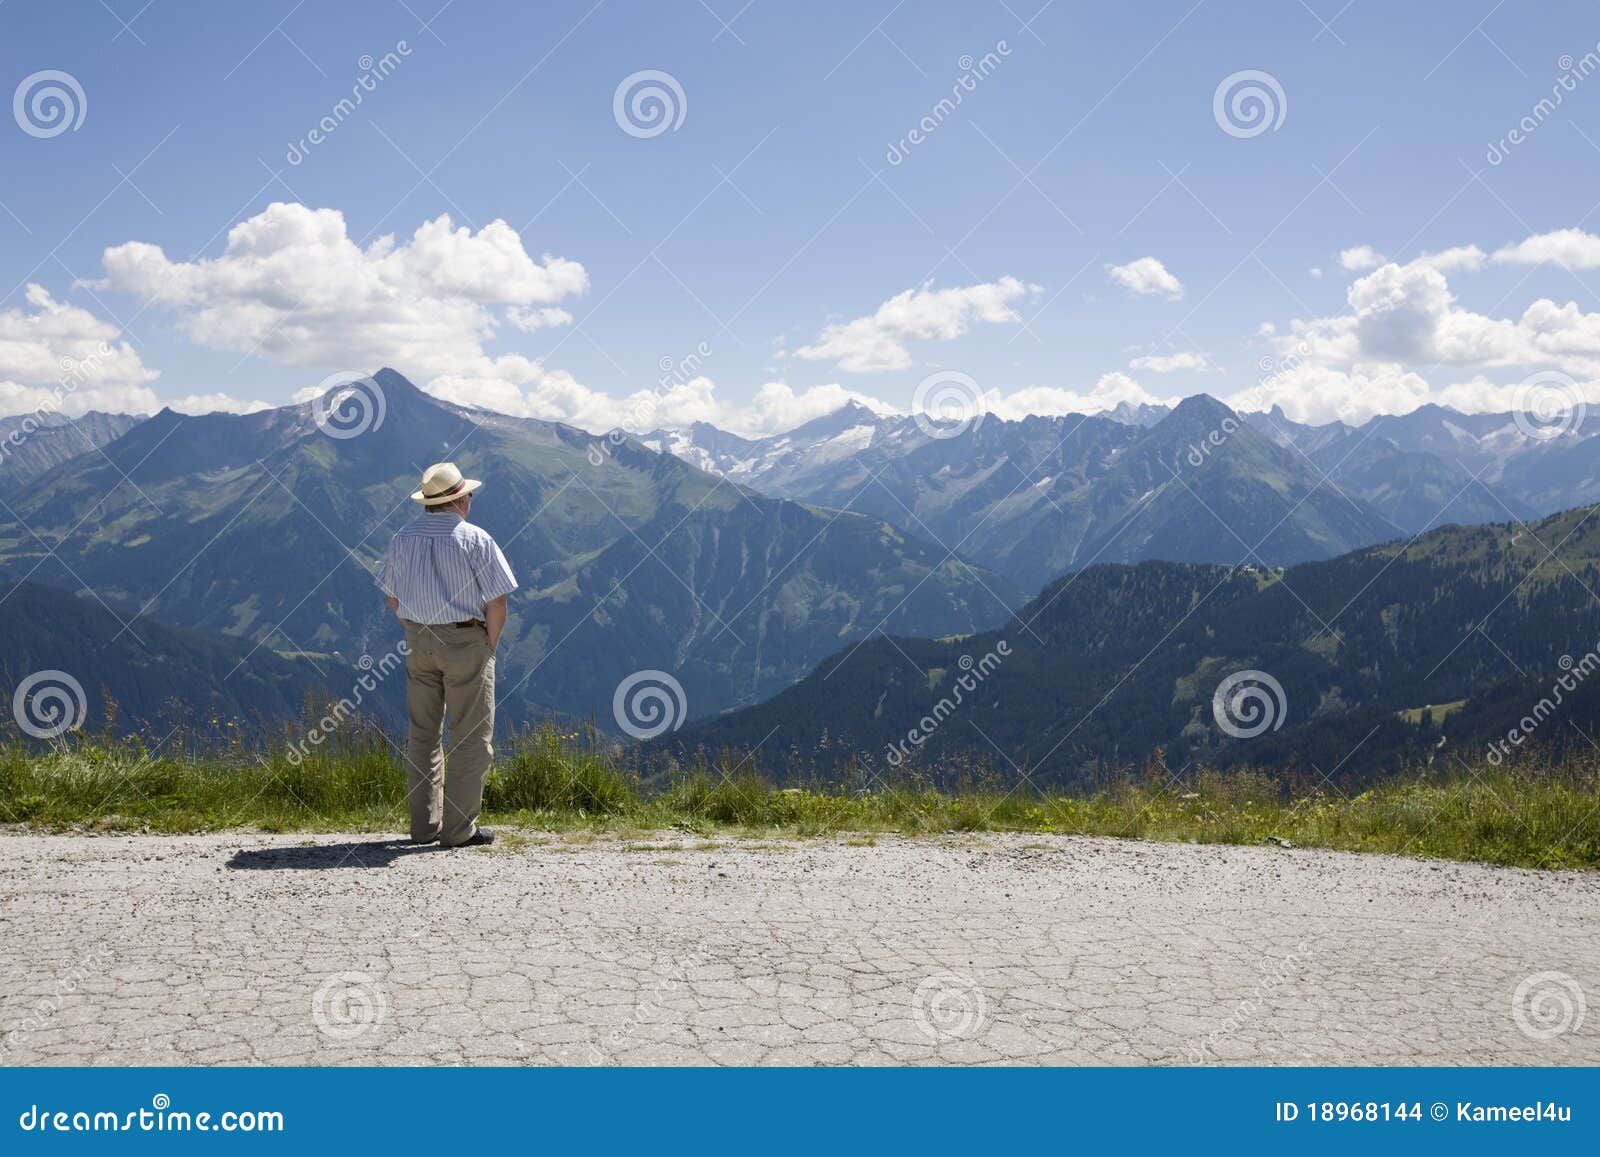 older man overlooking the valley